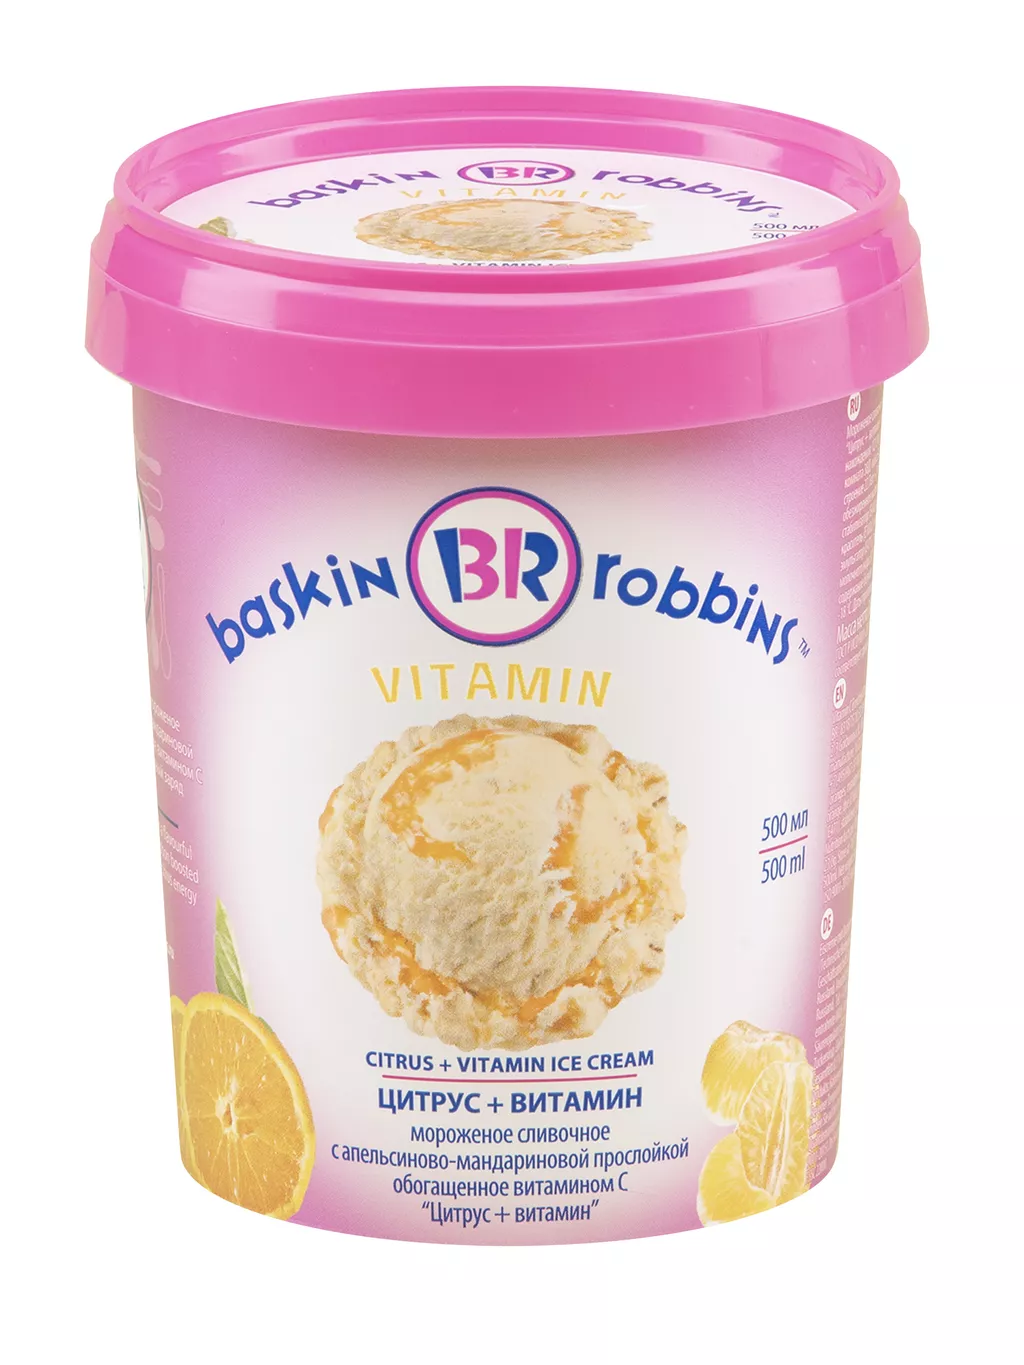 фотография продукта Мороженое баскин роббинс